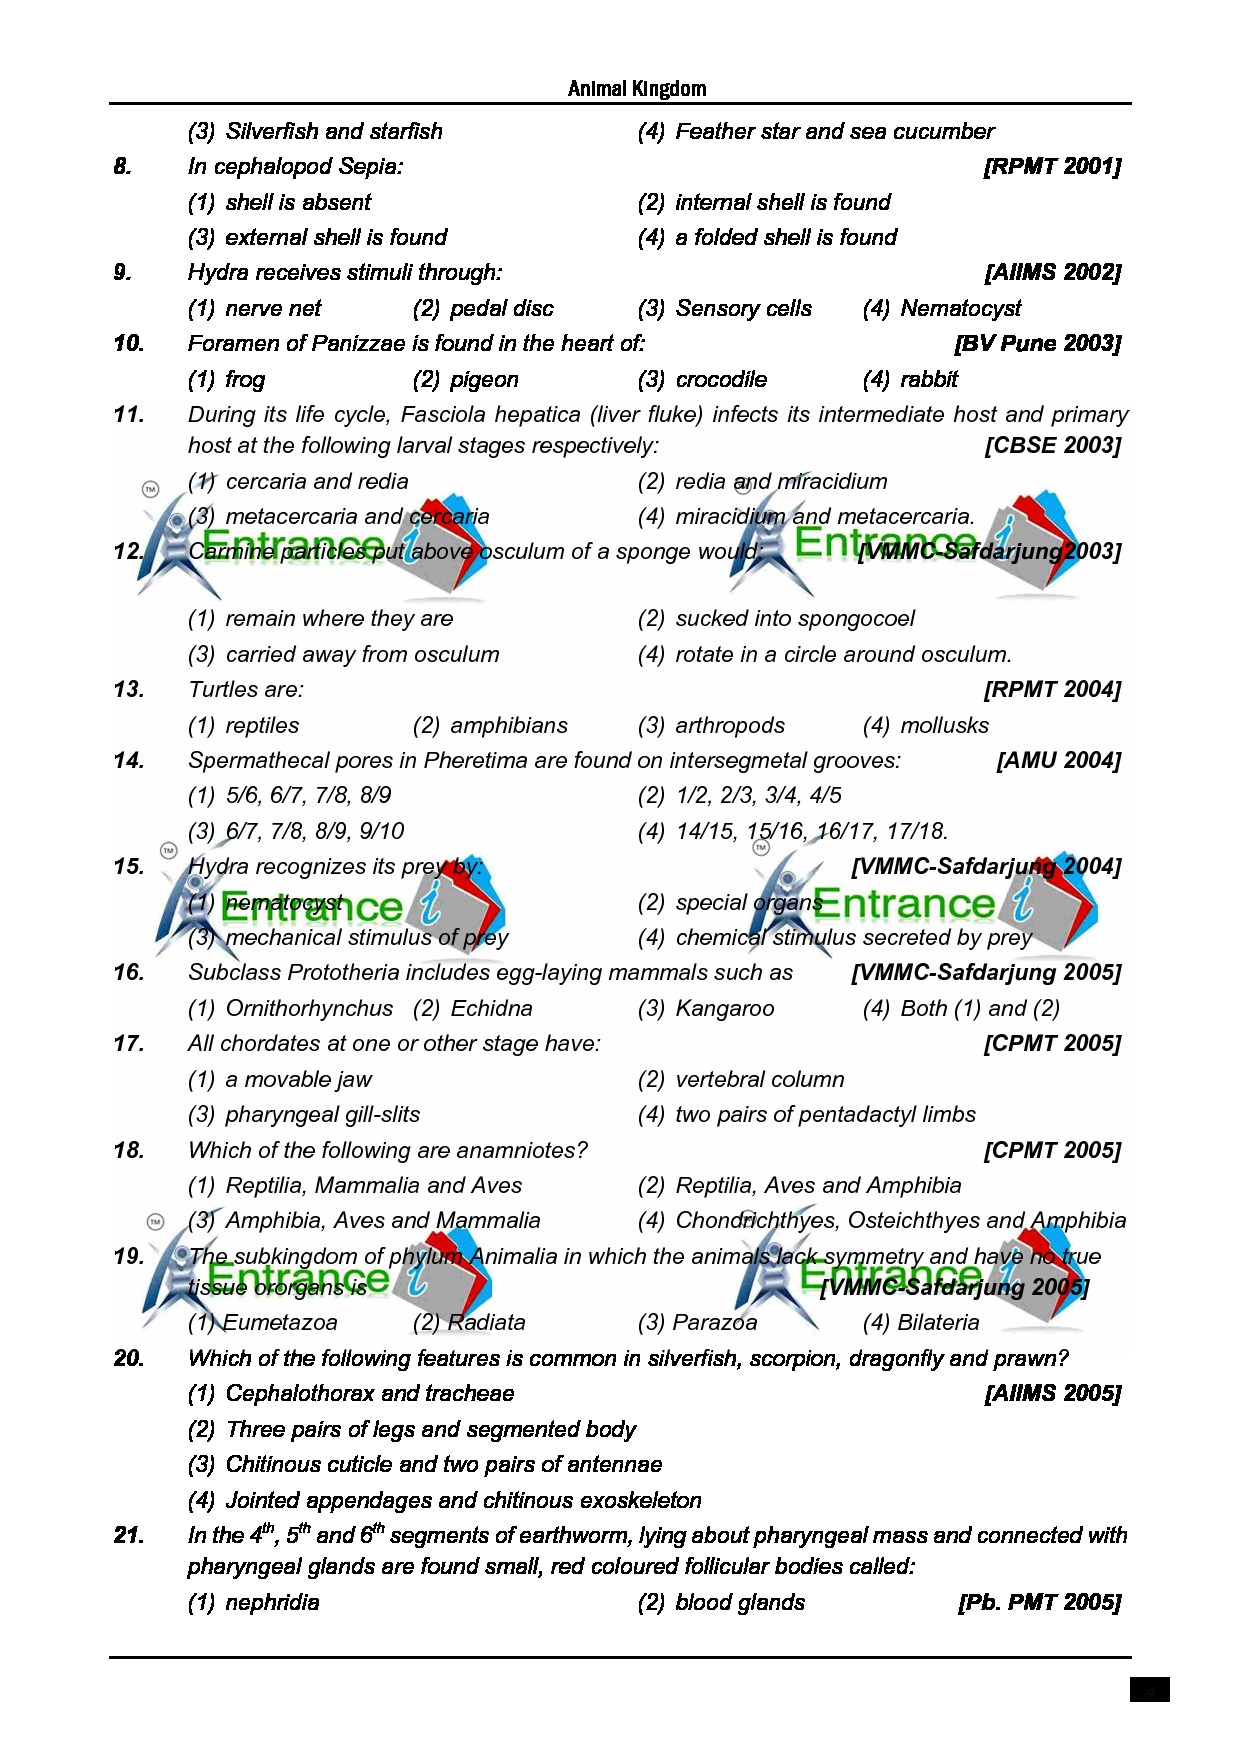 Dinesh biology mcq pdf